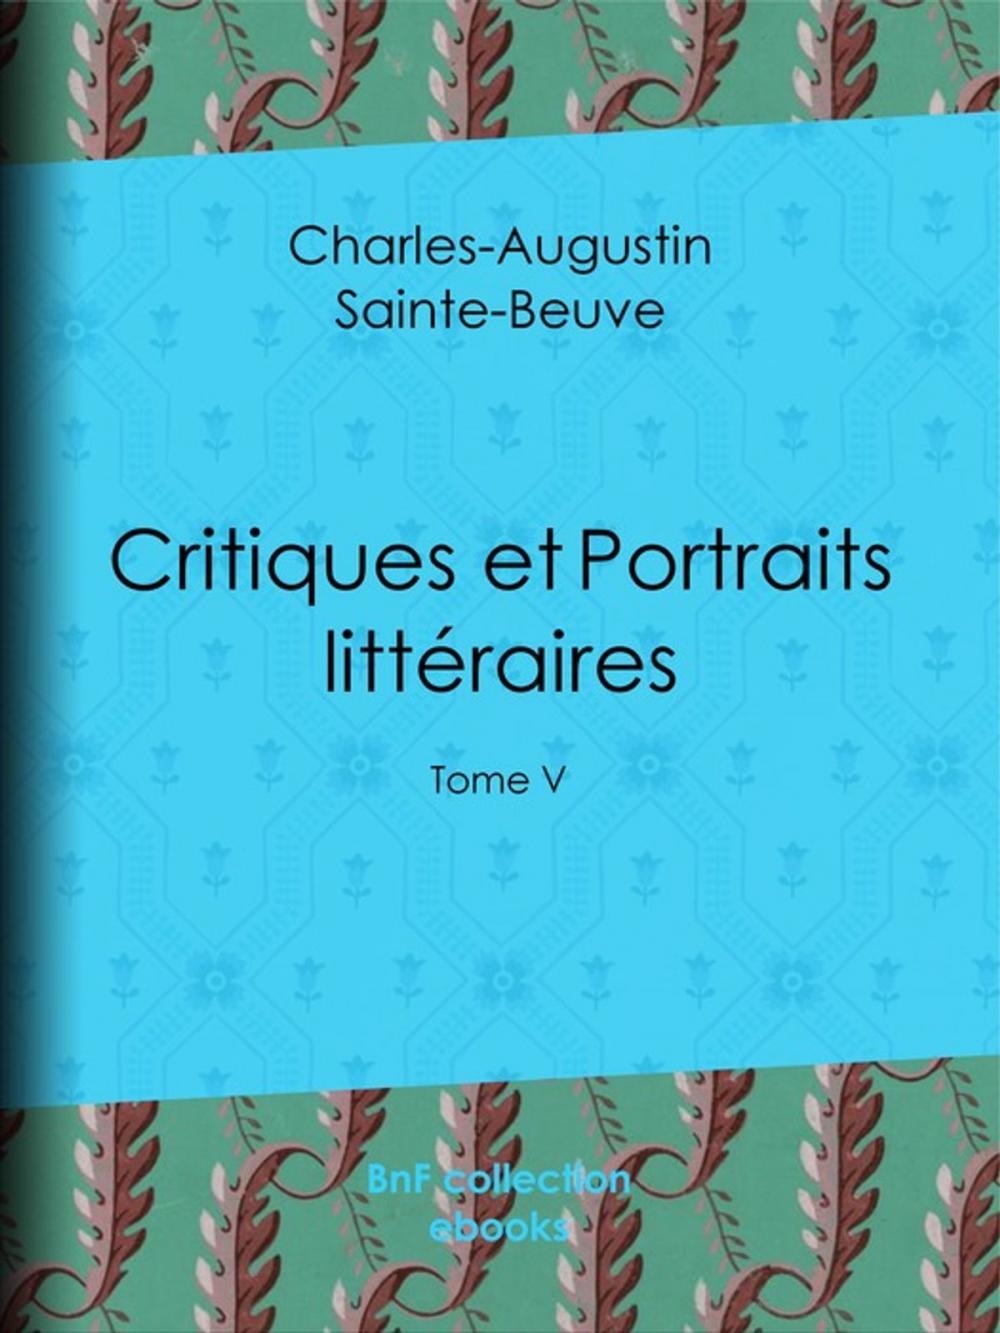 Big bigCover of Critiques et Portraits littéraires